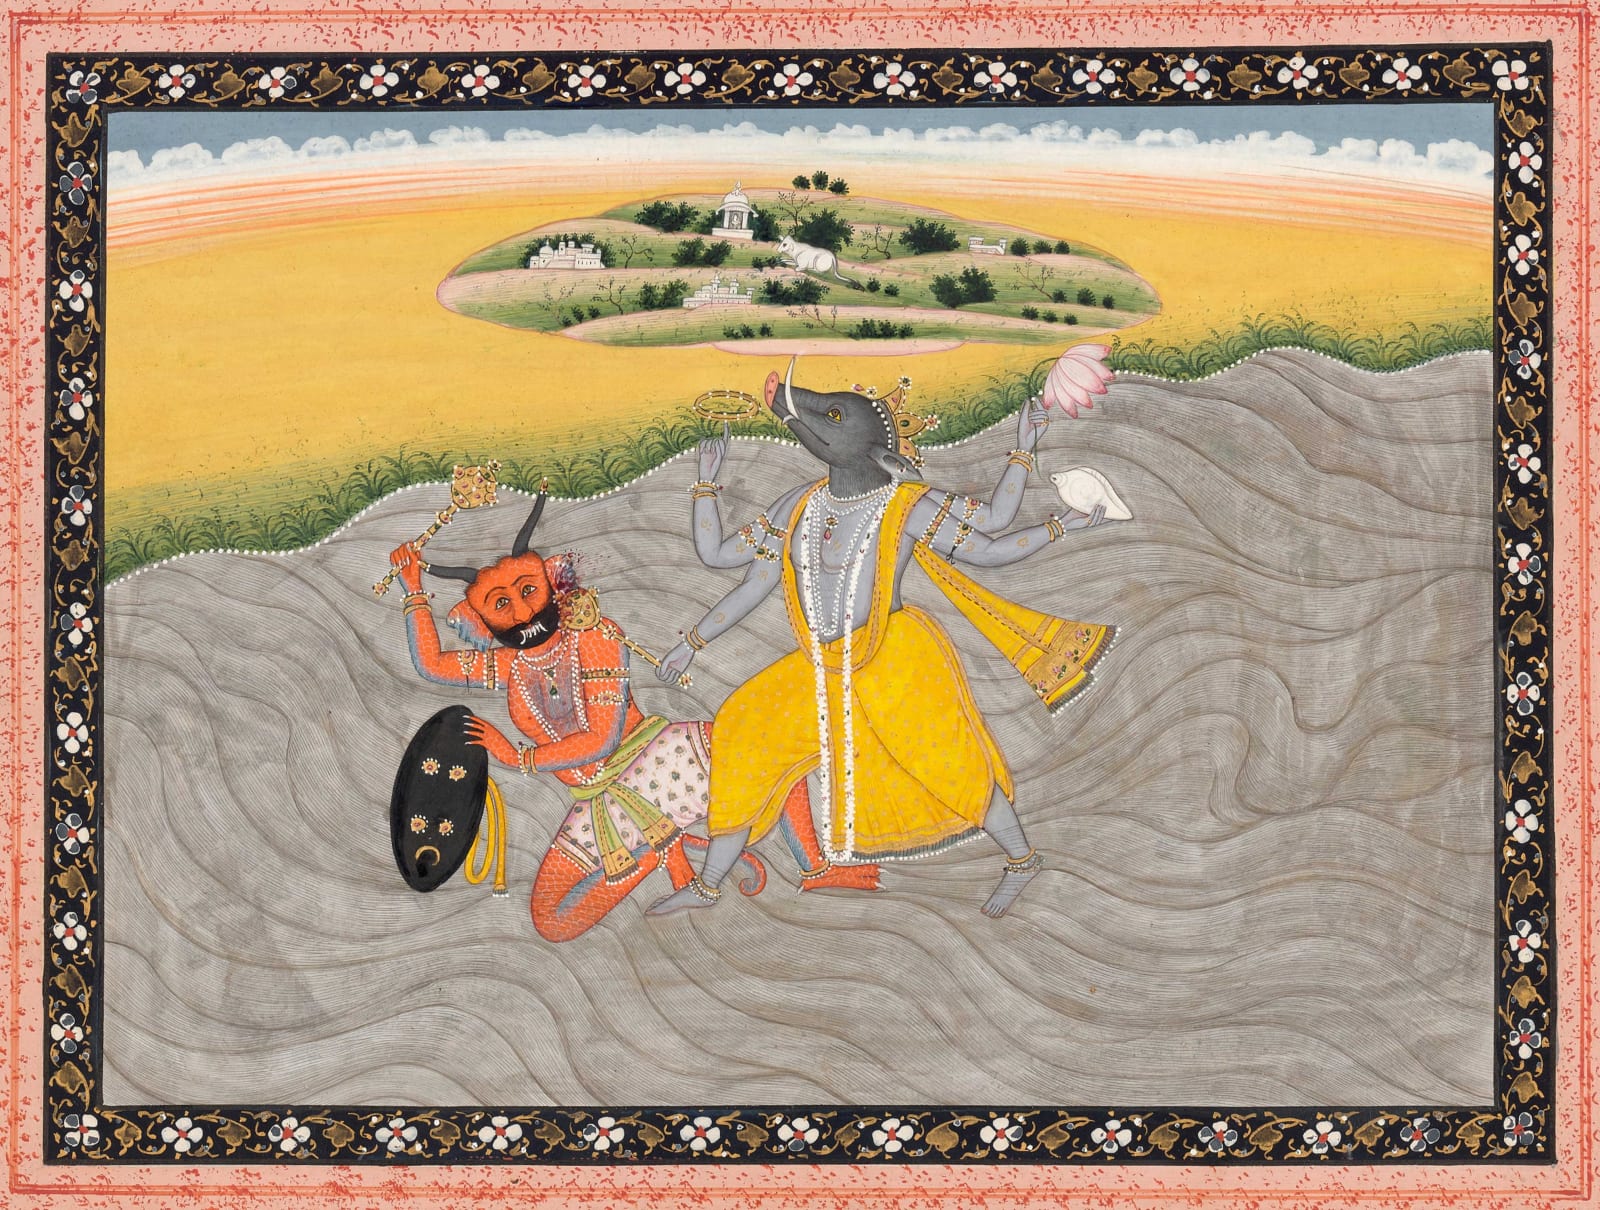 Vishnu as Varaha rescuing the earth, Kangra, 1820-40